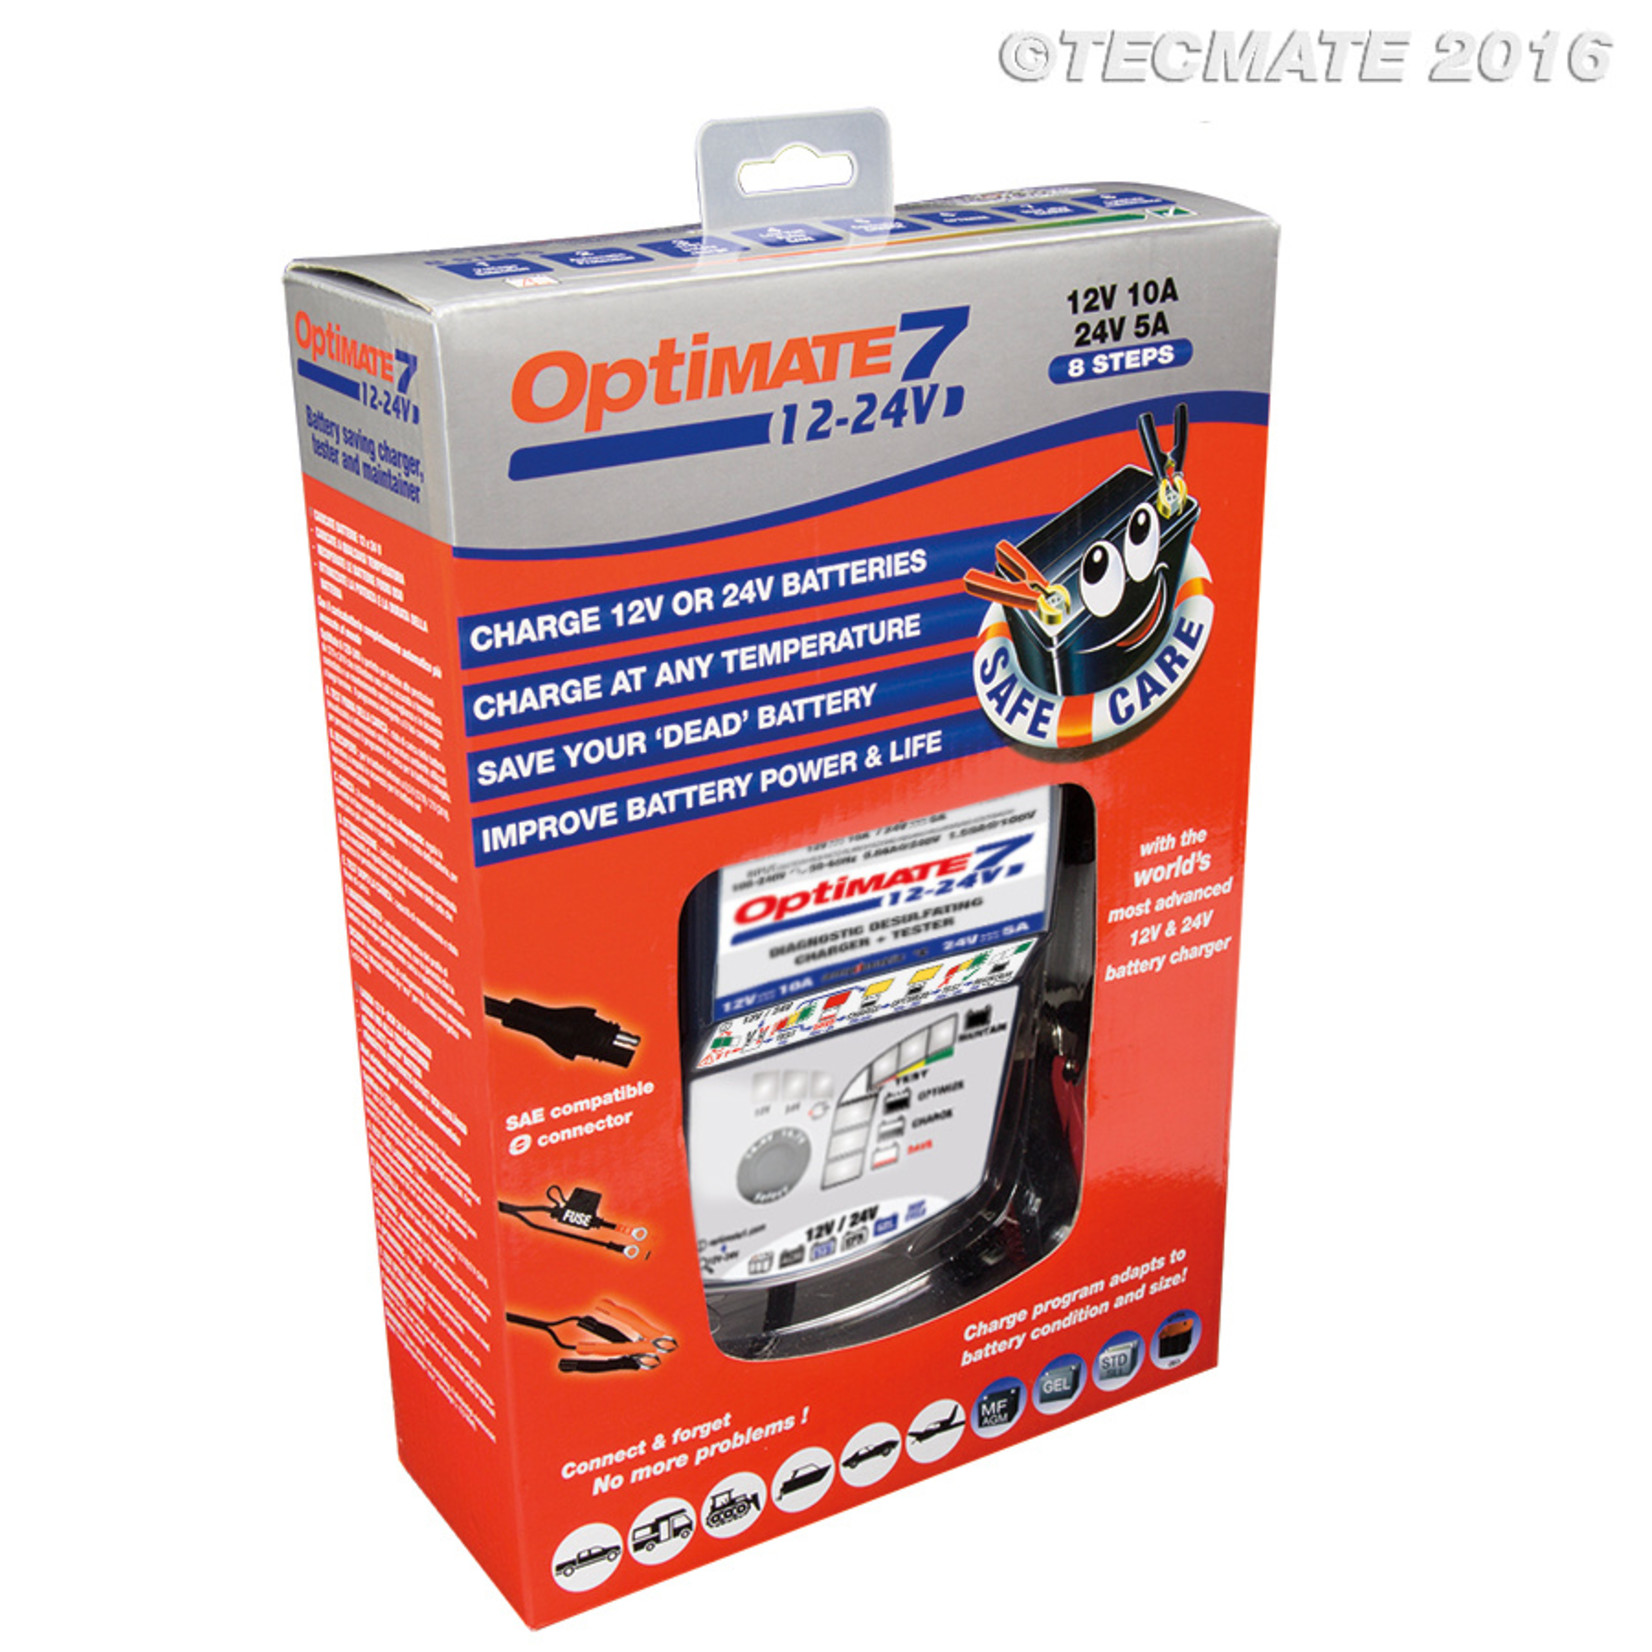 OptiMate OptiMate 7 12V-24V - Battery Charger